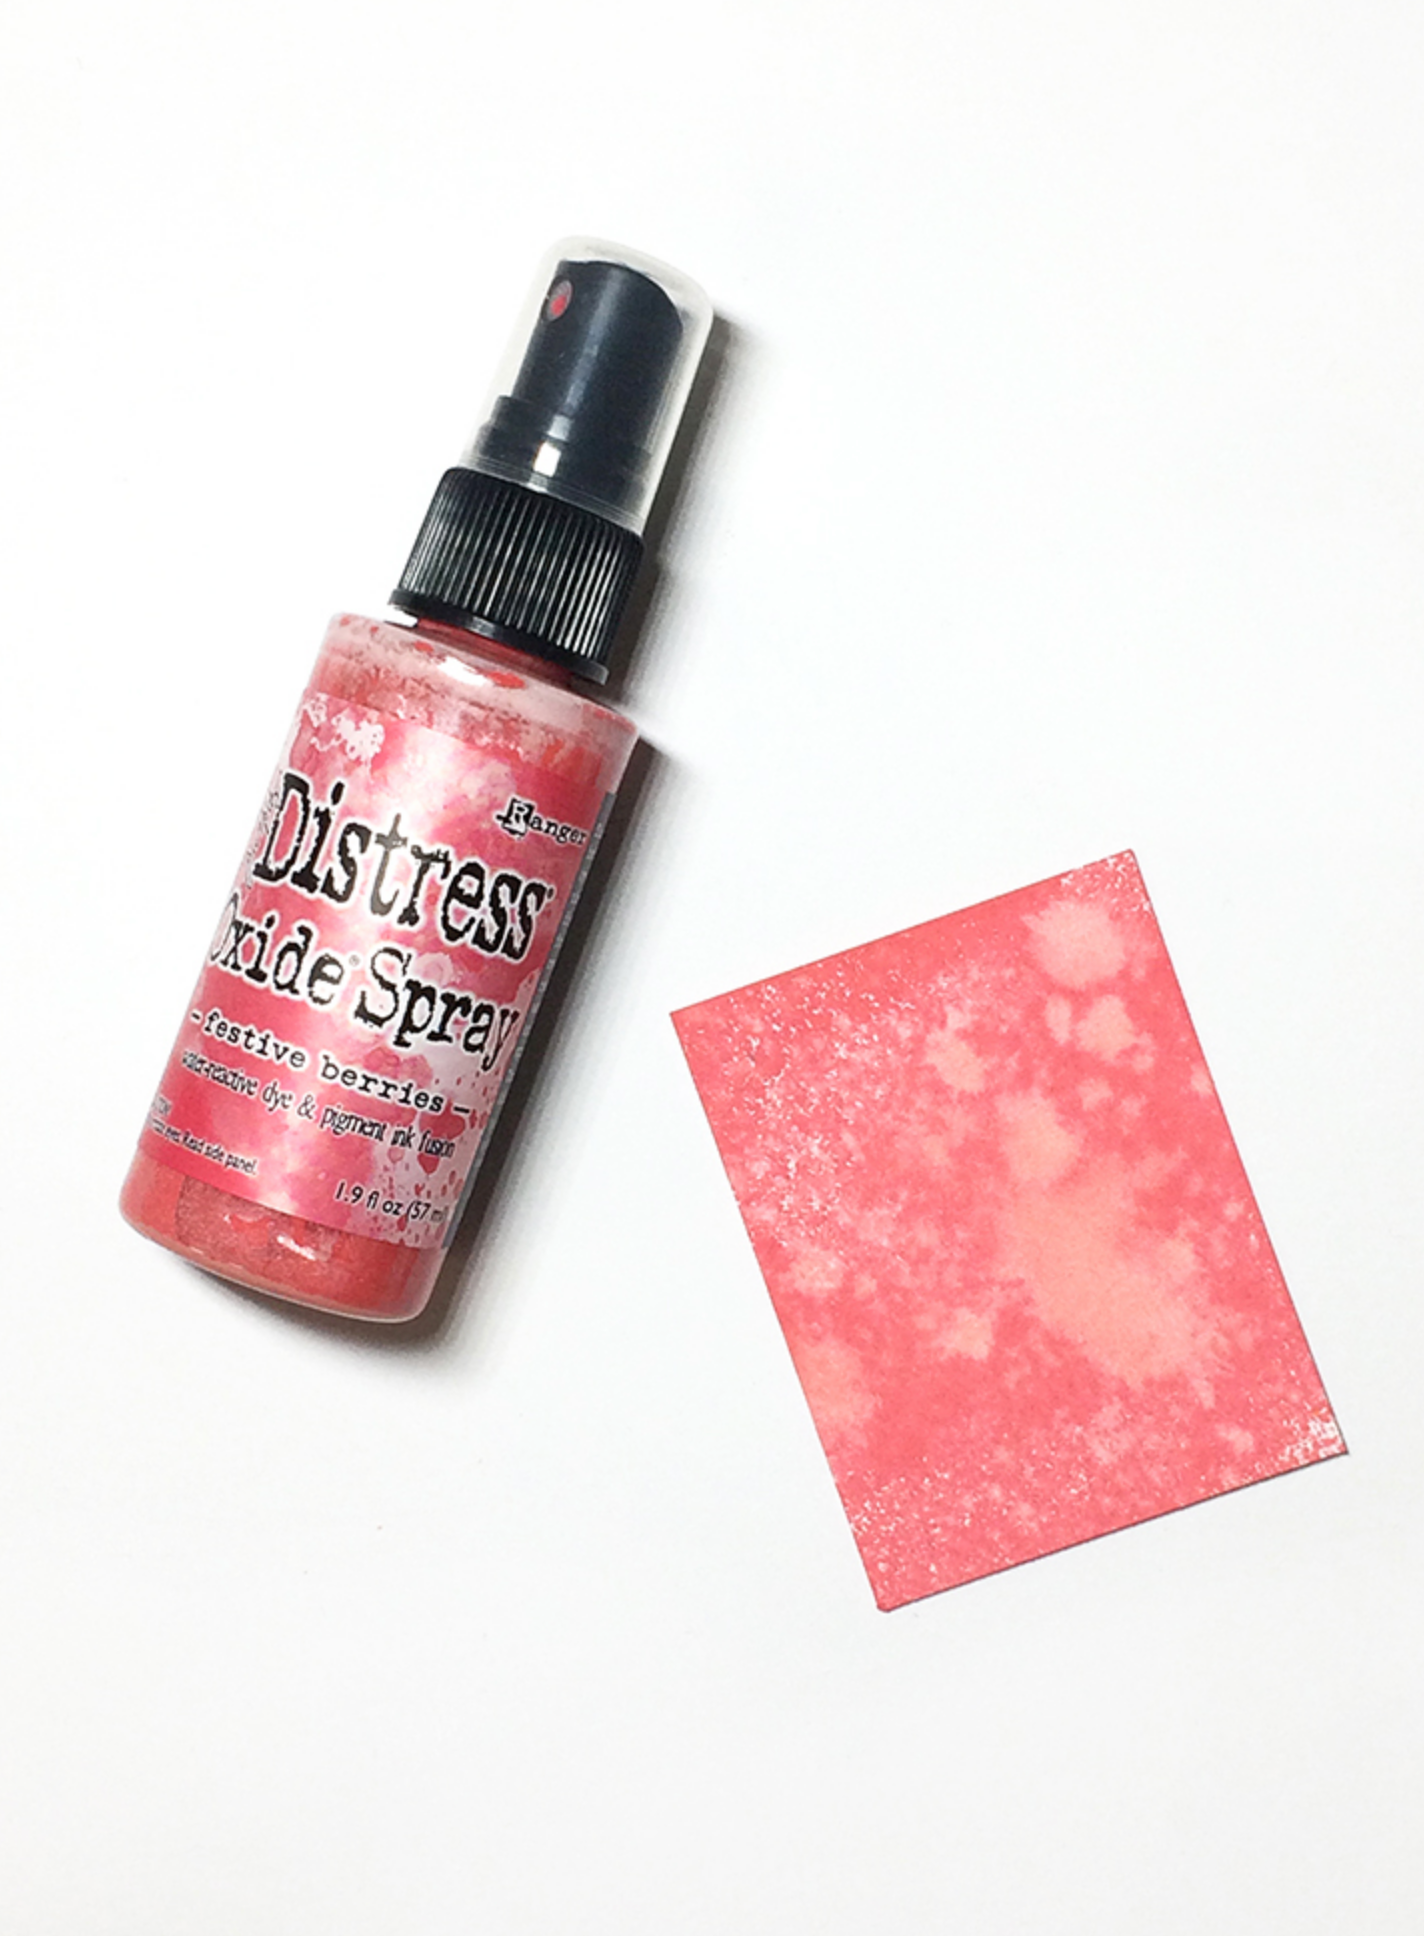 Tim Holtz Distress Oxide Spray - Festive Berries - Ranger Ink